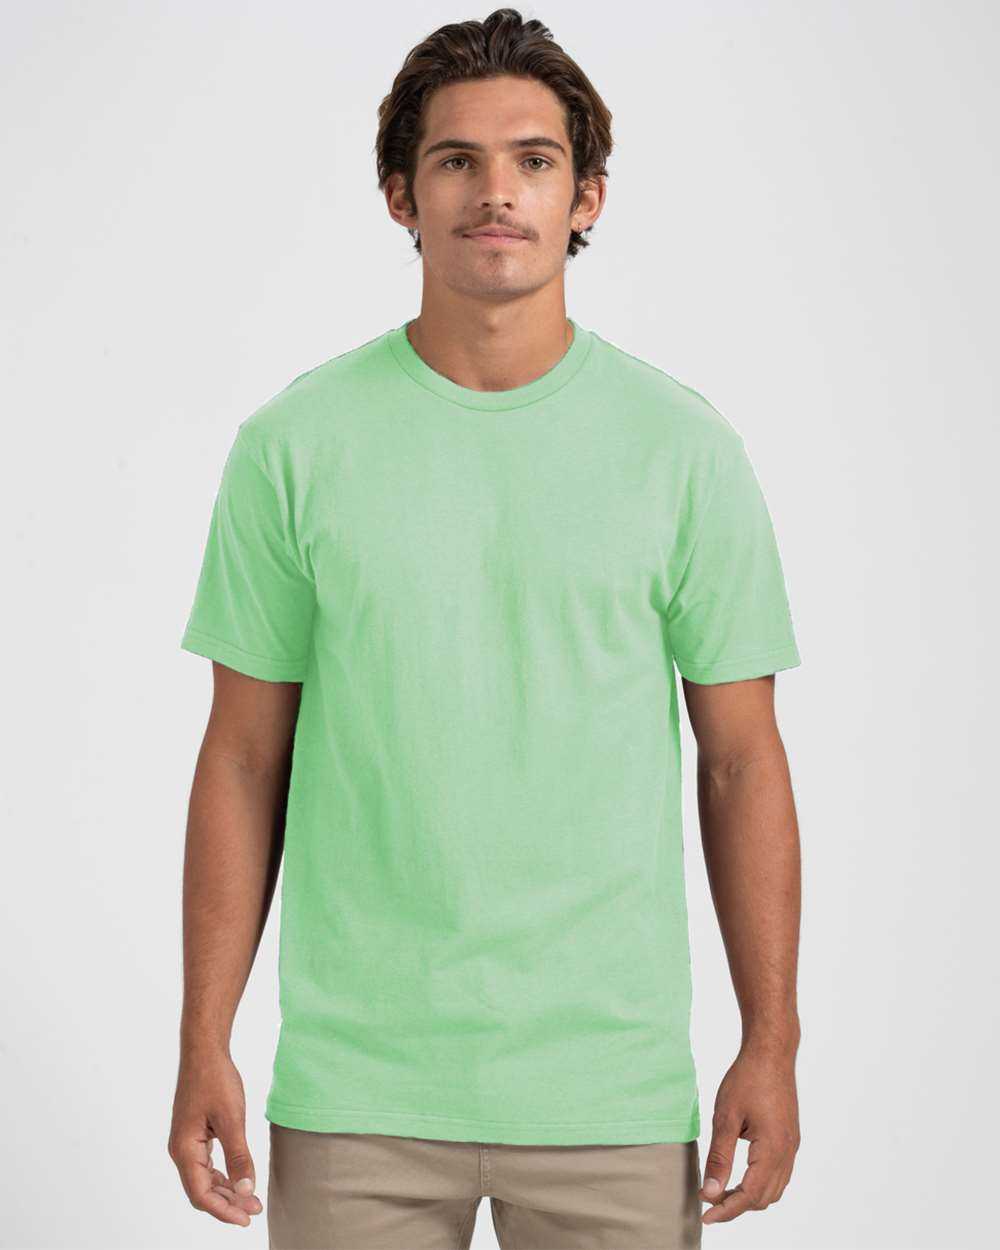 Tultex 290 Unisex Jersey T-Shirt - Neo Mint - HIT a Double